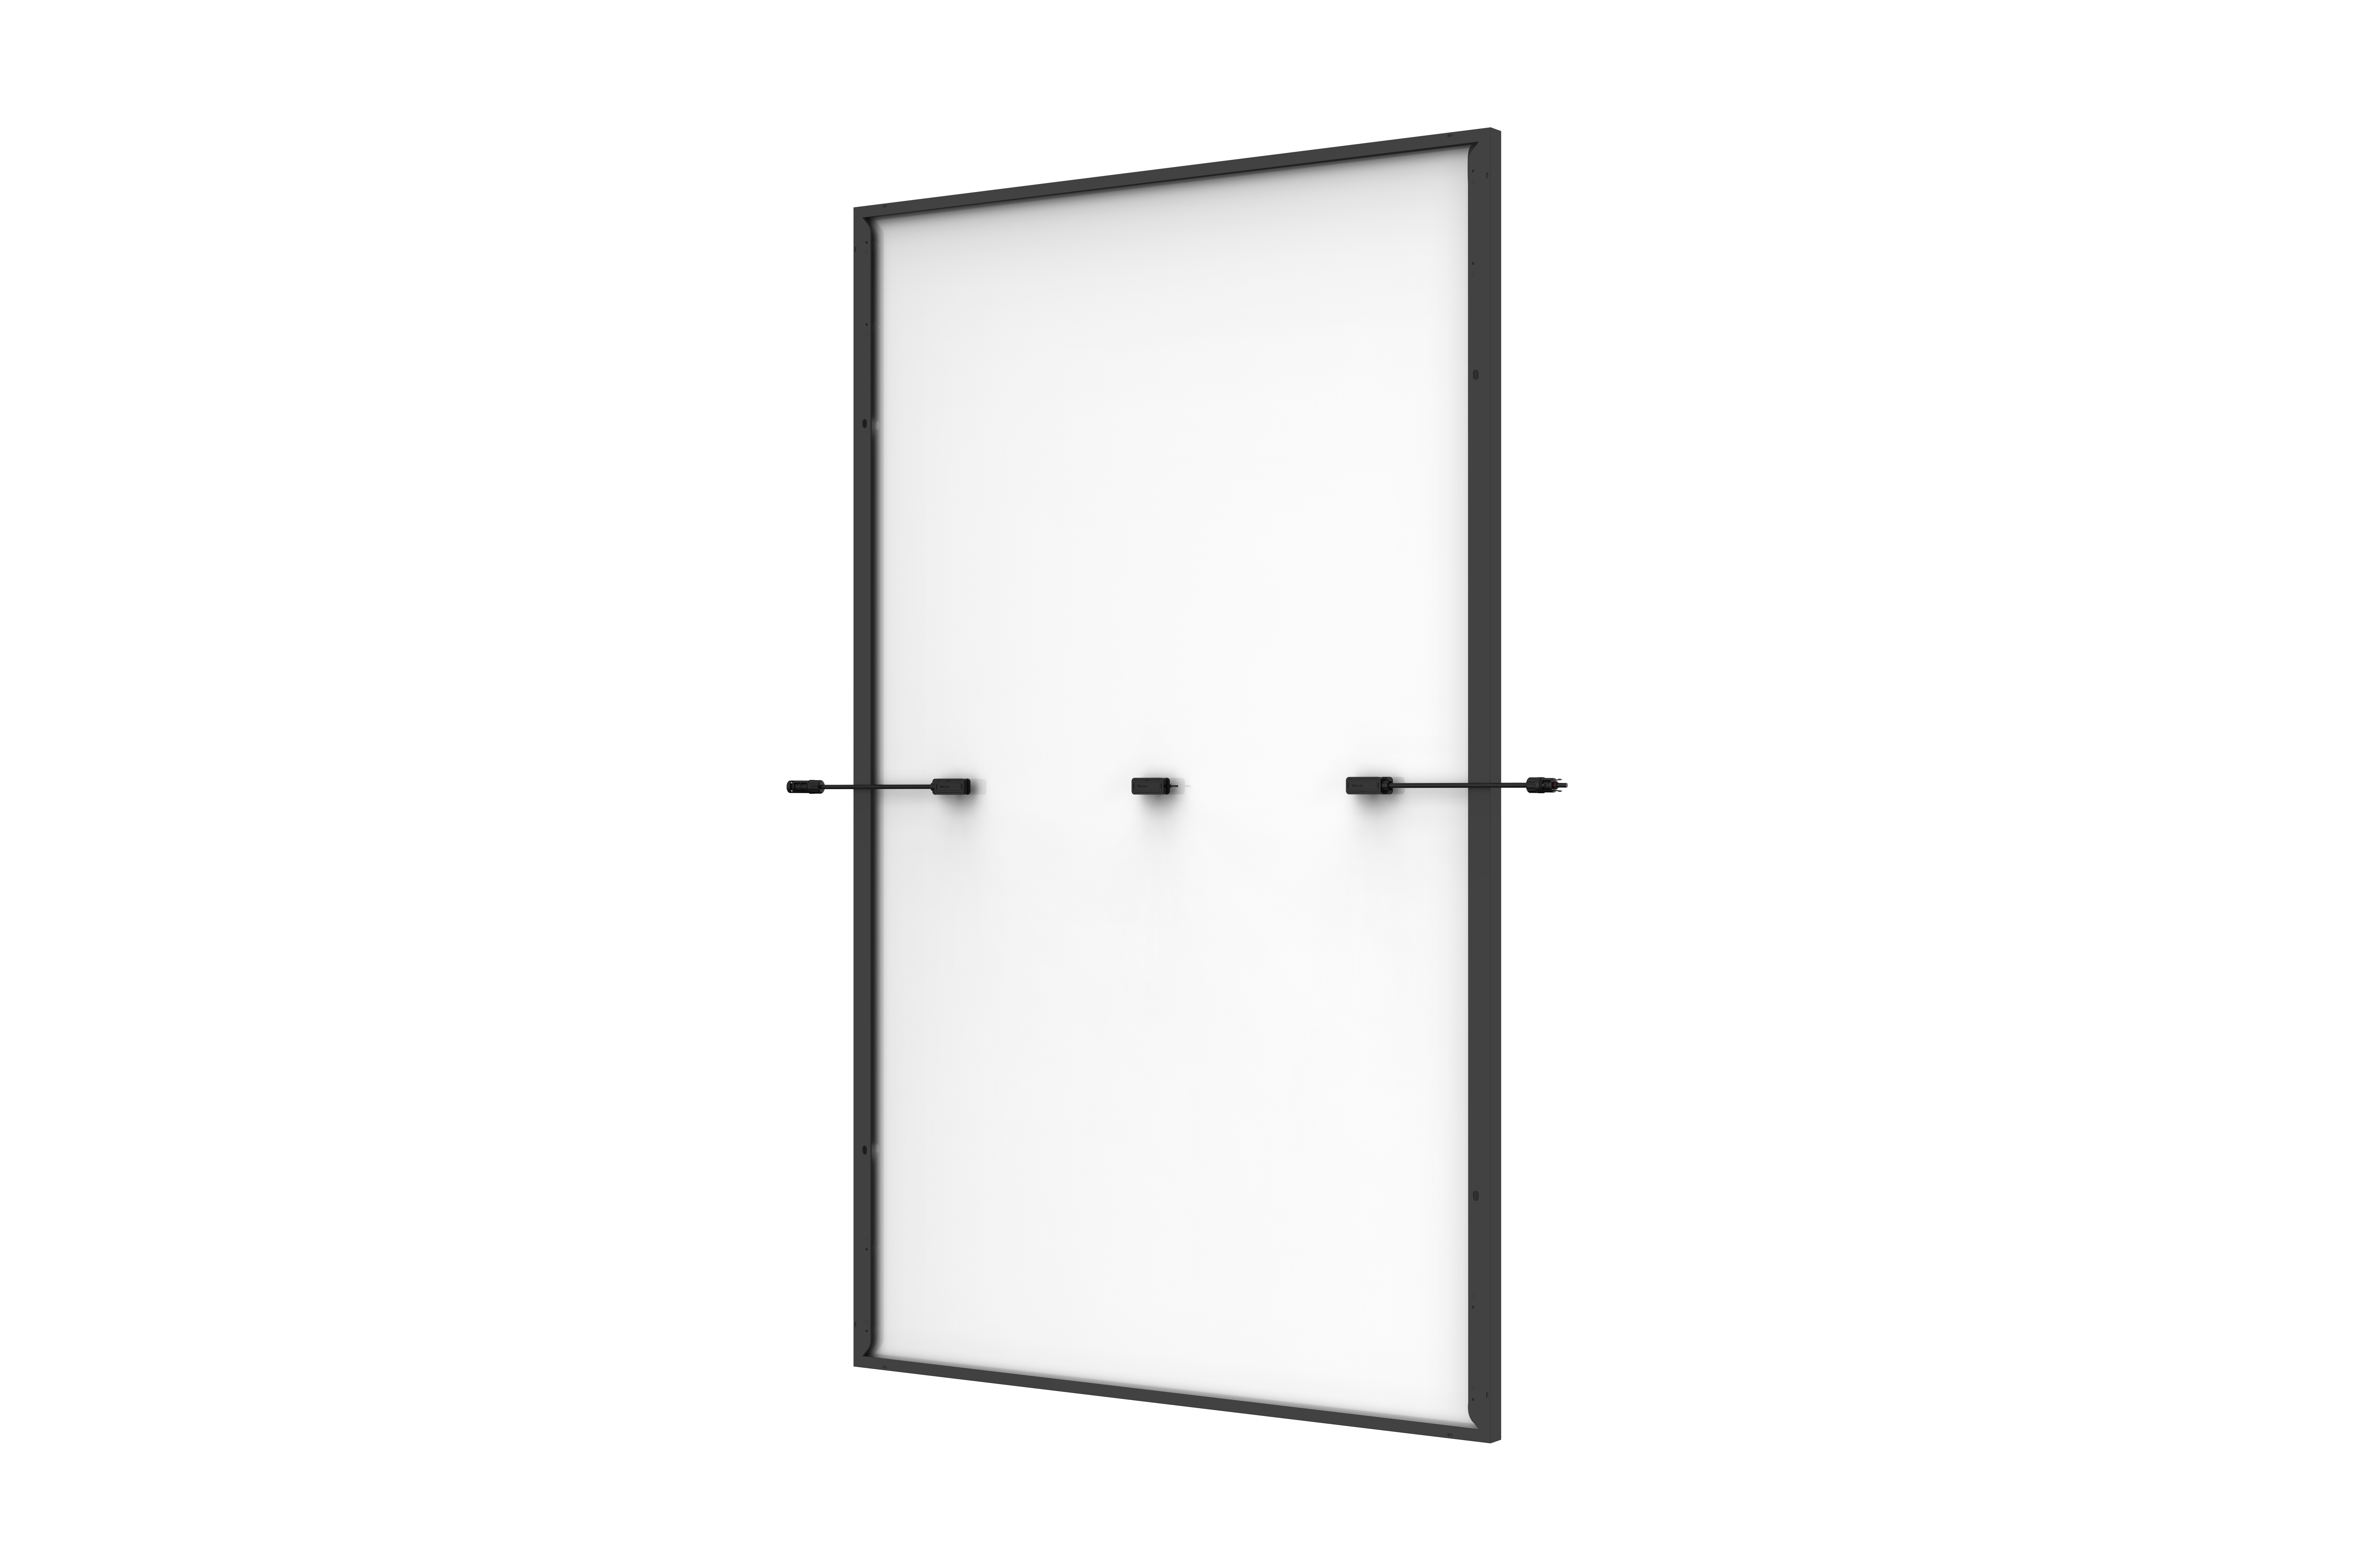 Trina Vertex S+ TSM-NEG9R.28/450Wp Monofazial Glas-Glas Black Frame (Container)